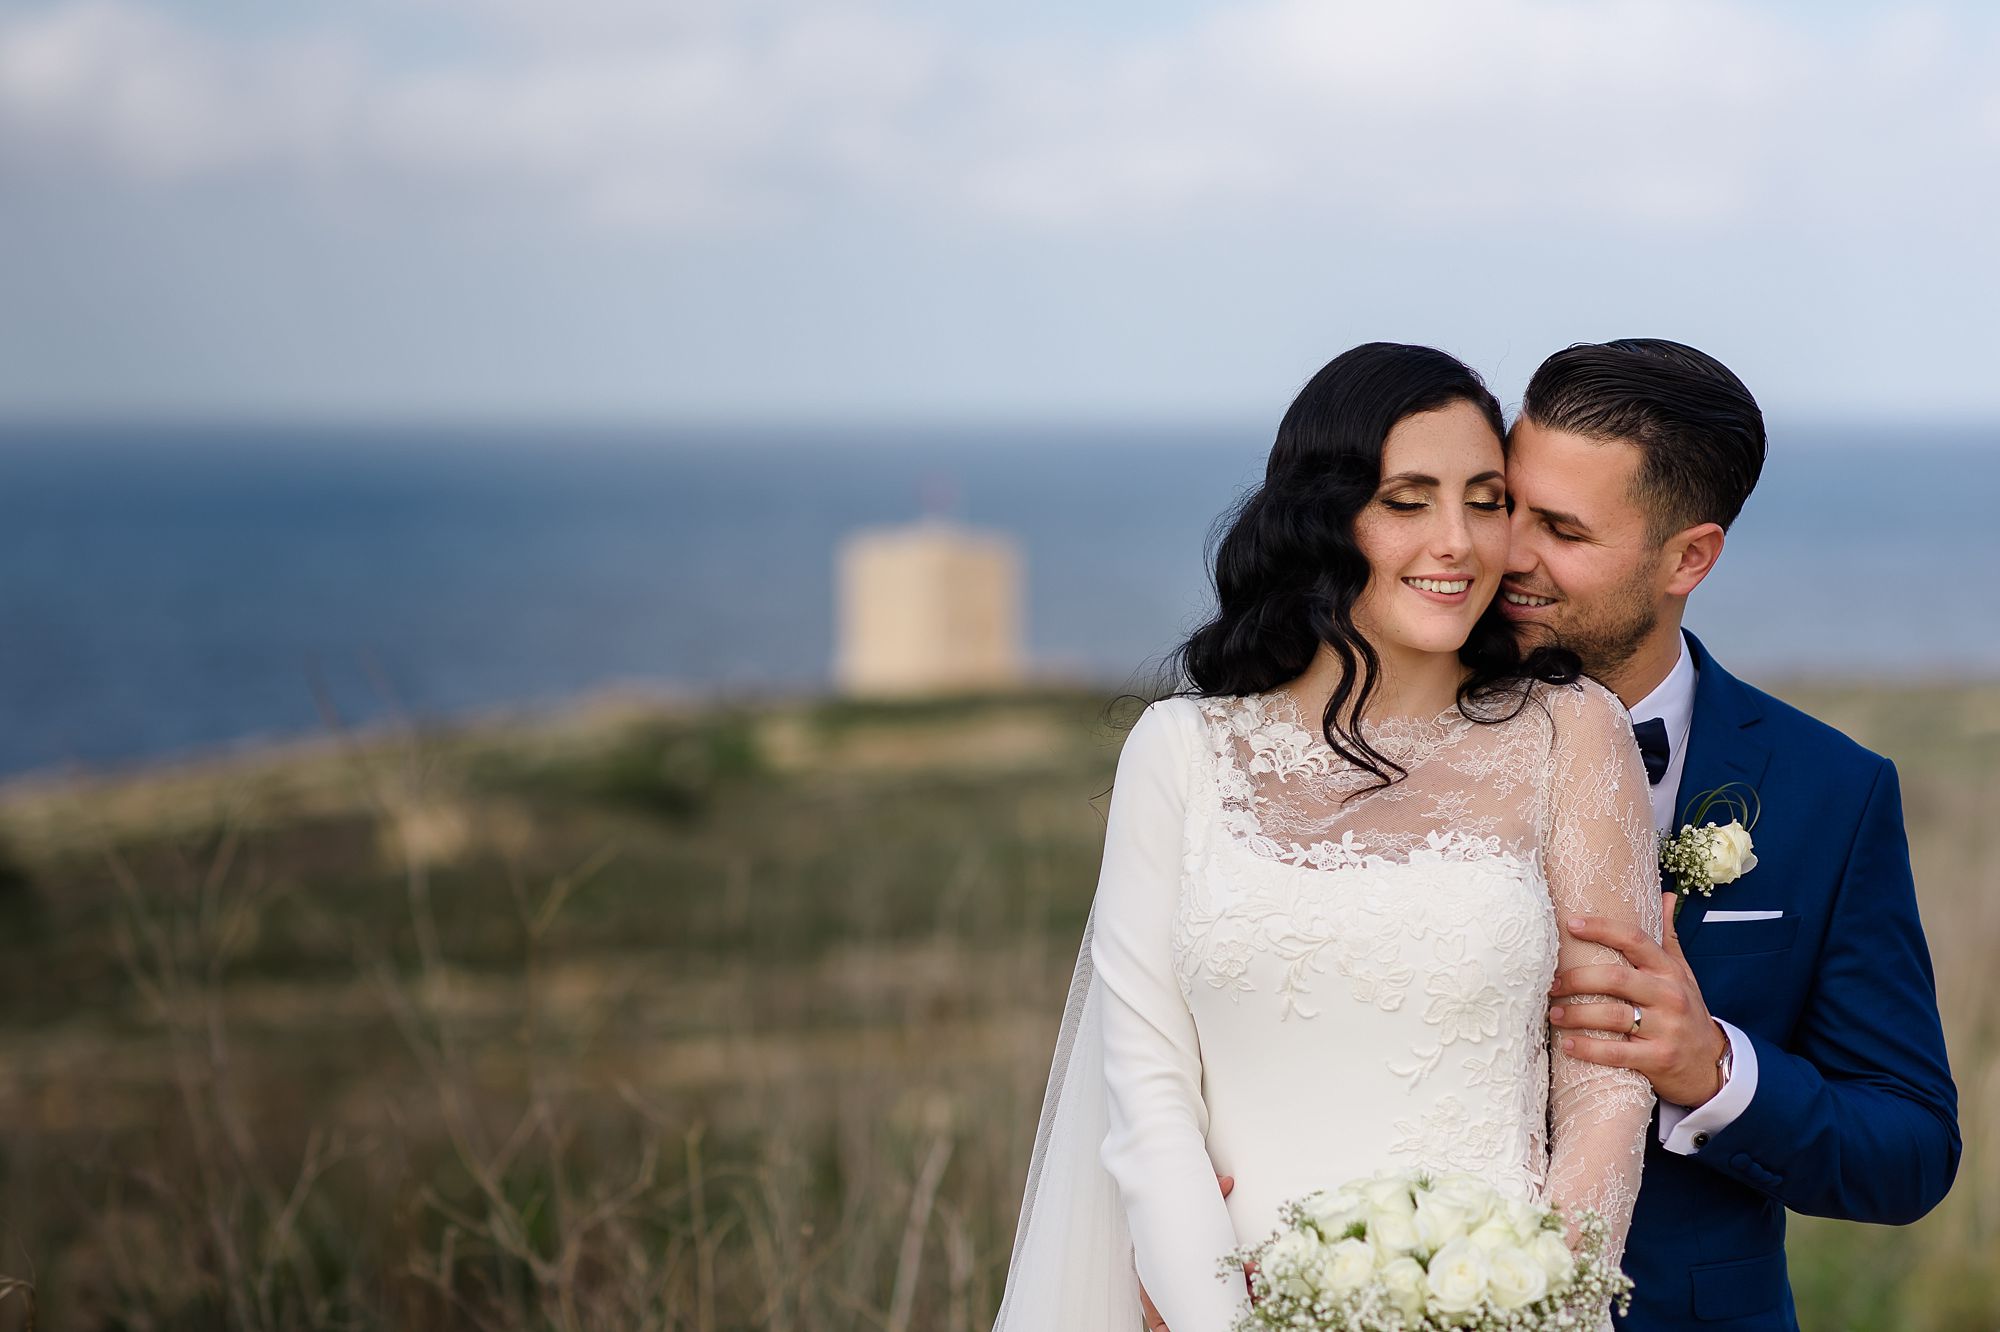 Kristina & Ben Camille - Buddhamann Corinthia - Wedding Photography Malta - Shane P. Watts